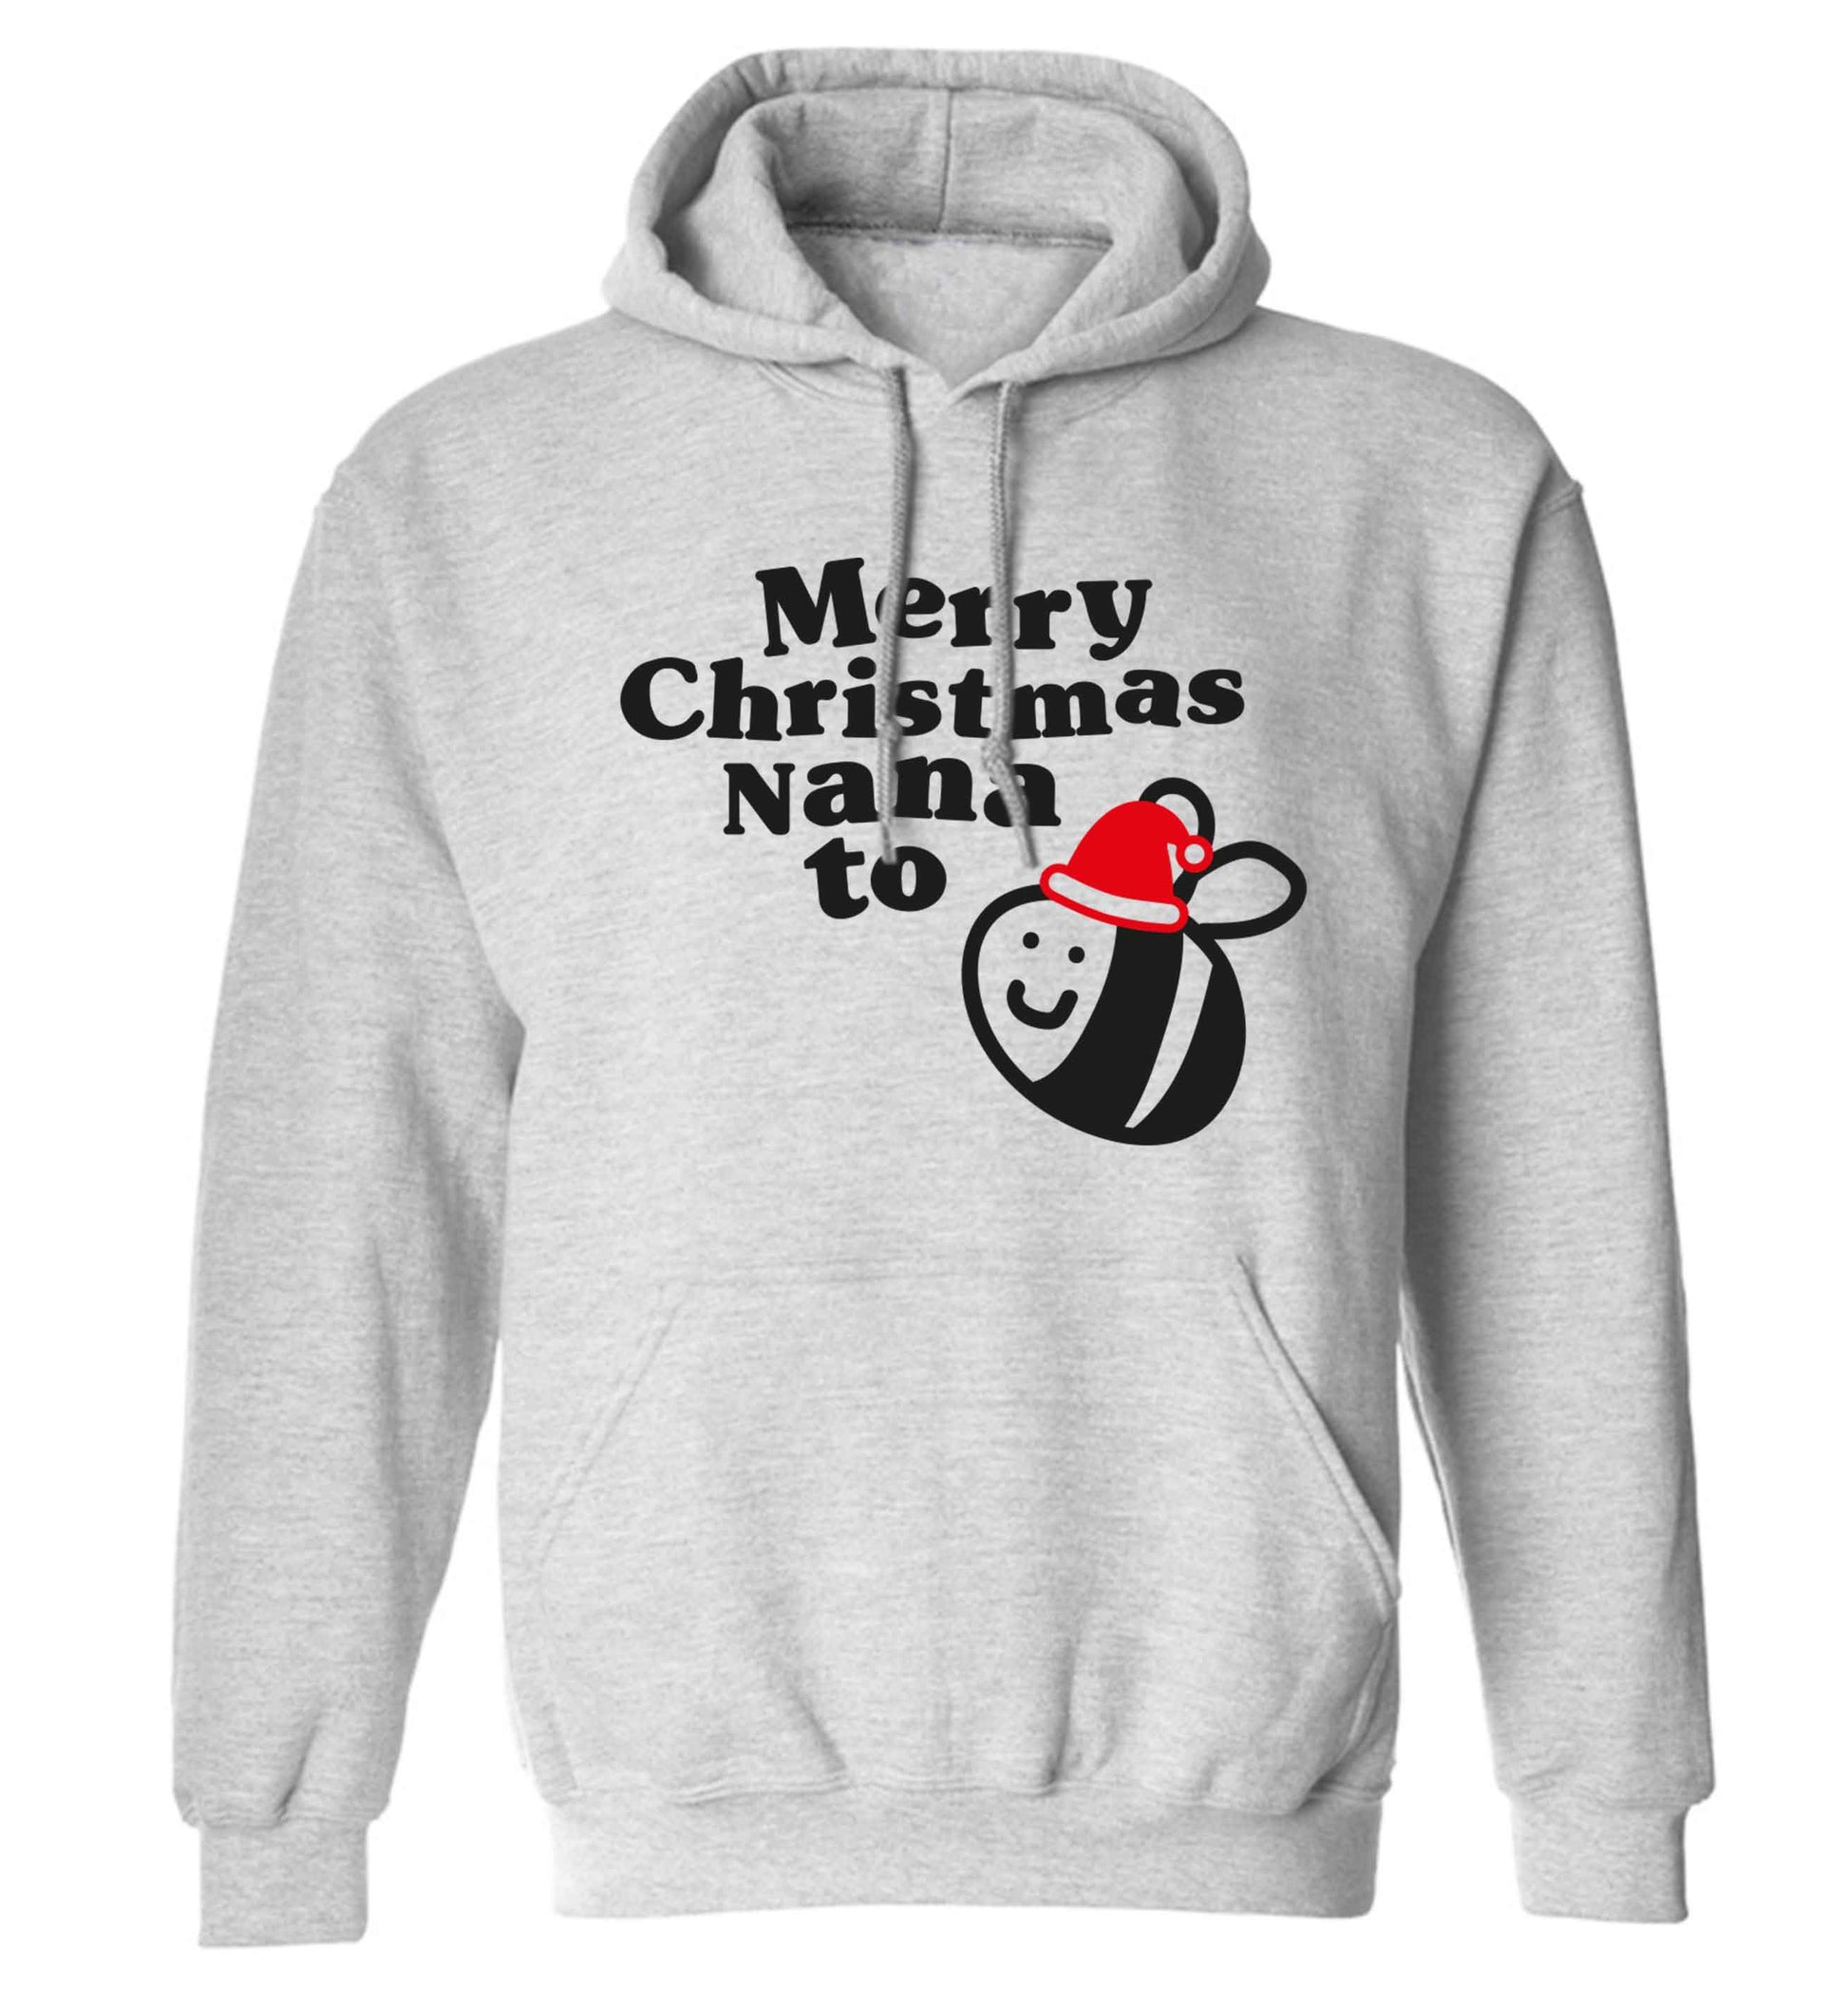 Merry Christmas nana to be adults unisex grey hoodie 2XL